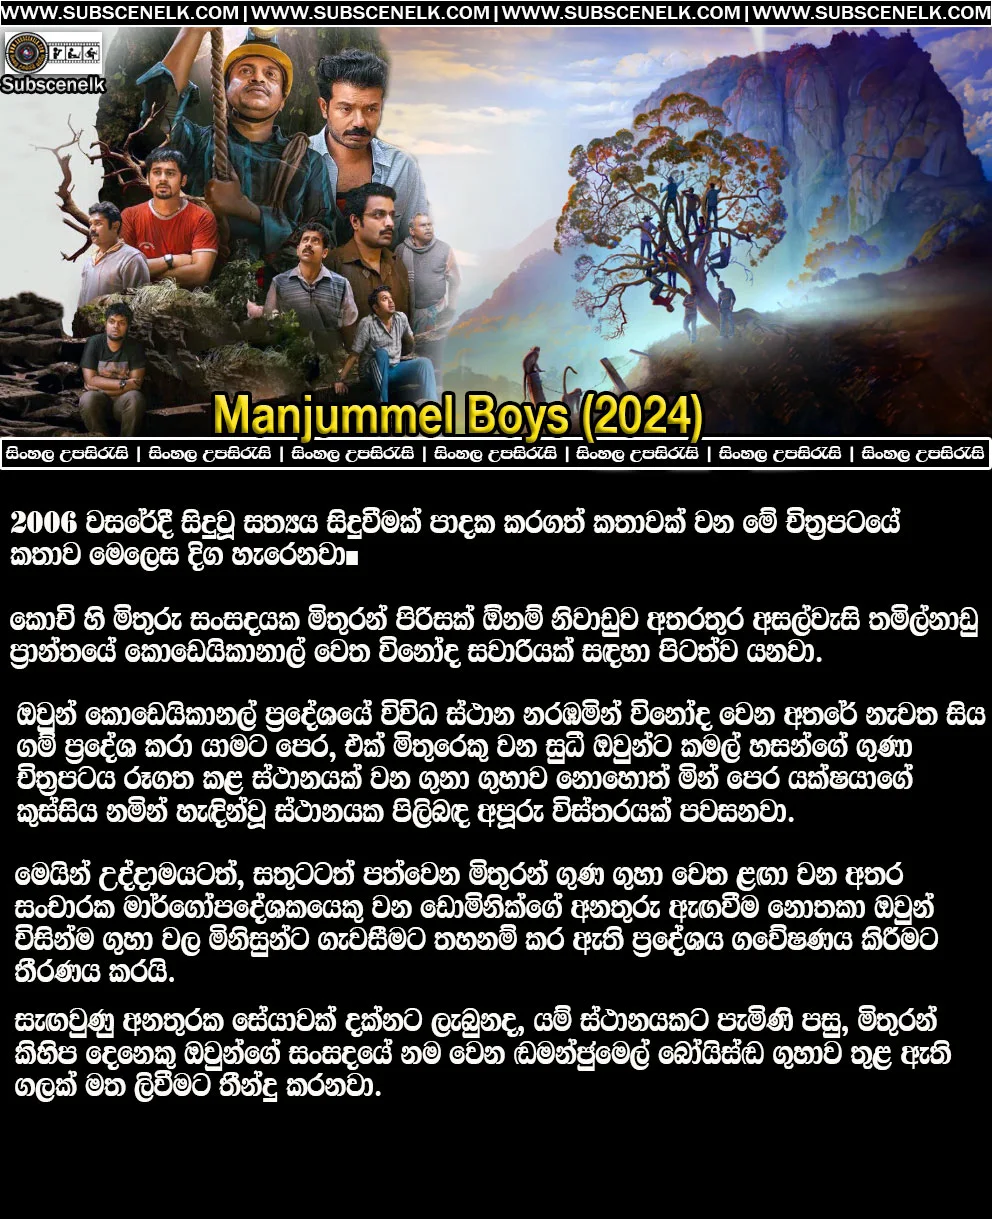 Manjummel Boys (2024) Sinhala Subtitle,Manjummel Boys (2024) Sinhala Sub,Manjummel Boys Sinhala Subtitle,Manjummel Boys Sinhala Sub,Manjummel Boys (2024) Review,Manjummel Boys (2024) Cast,Manjummel Boys (2024) Crew,Manjummel Boys (2024) Story,